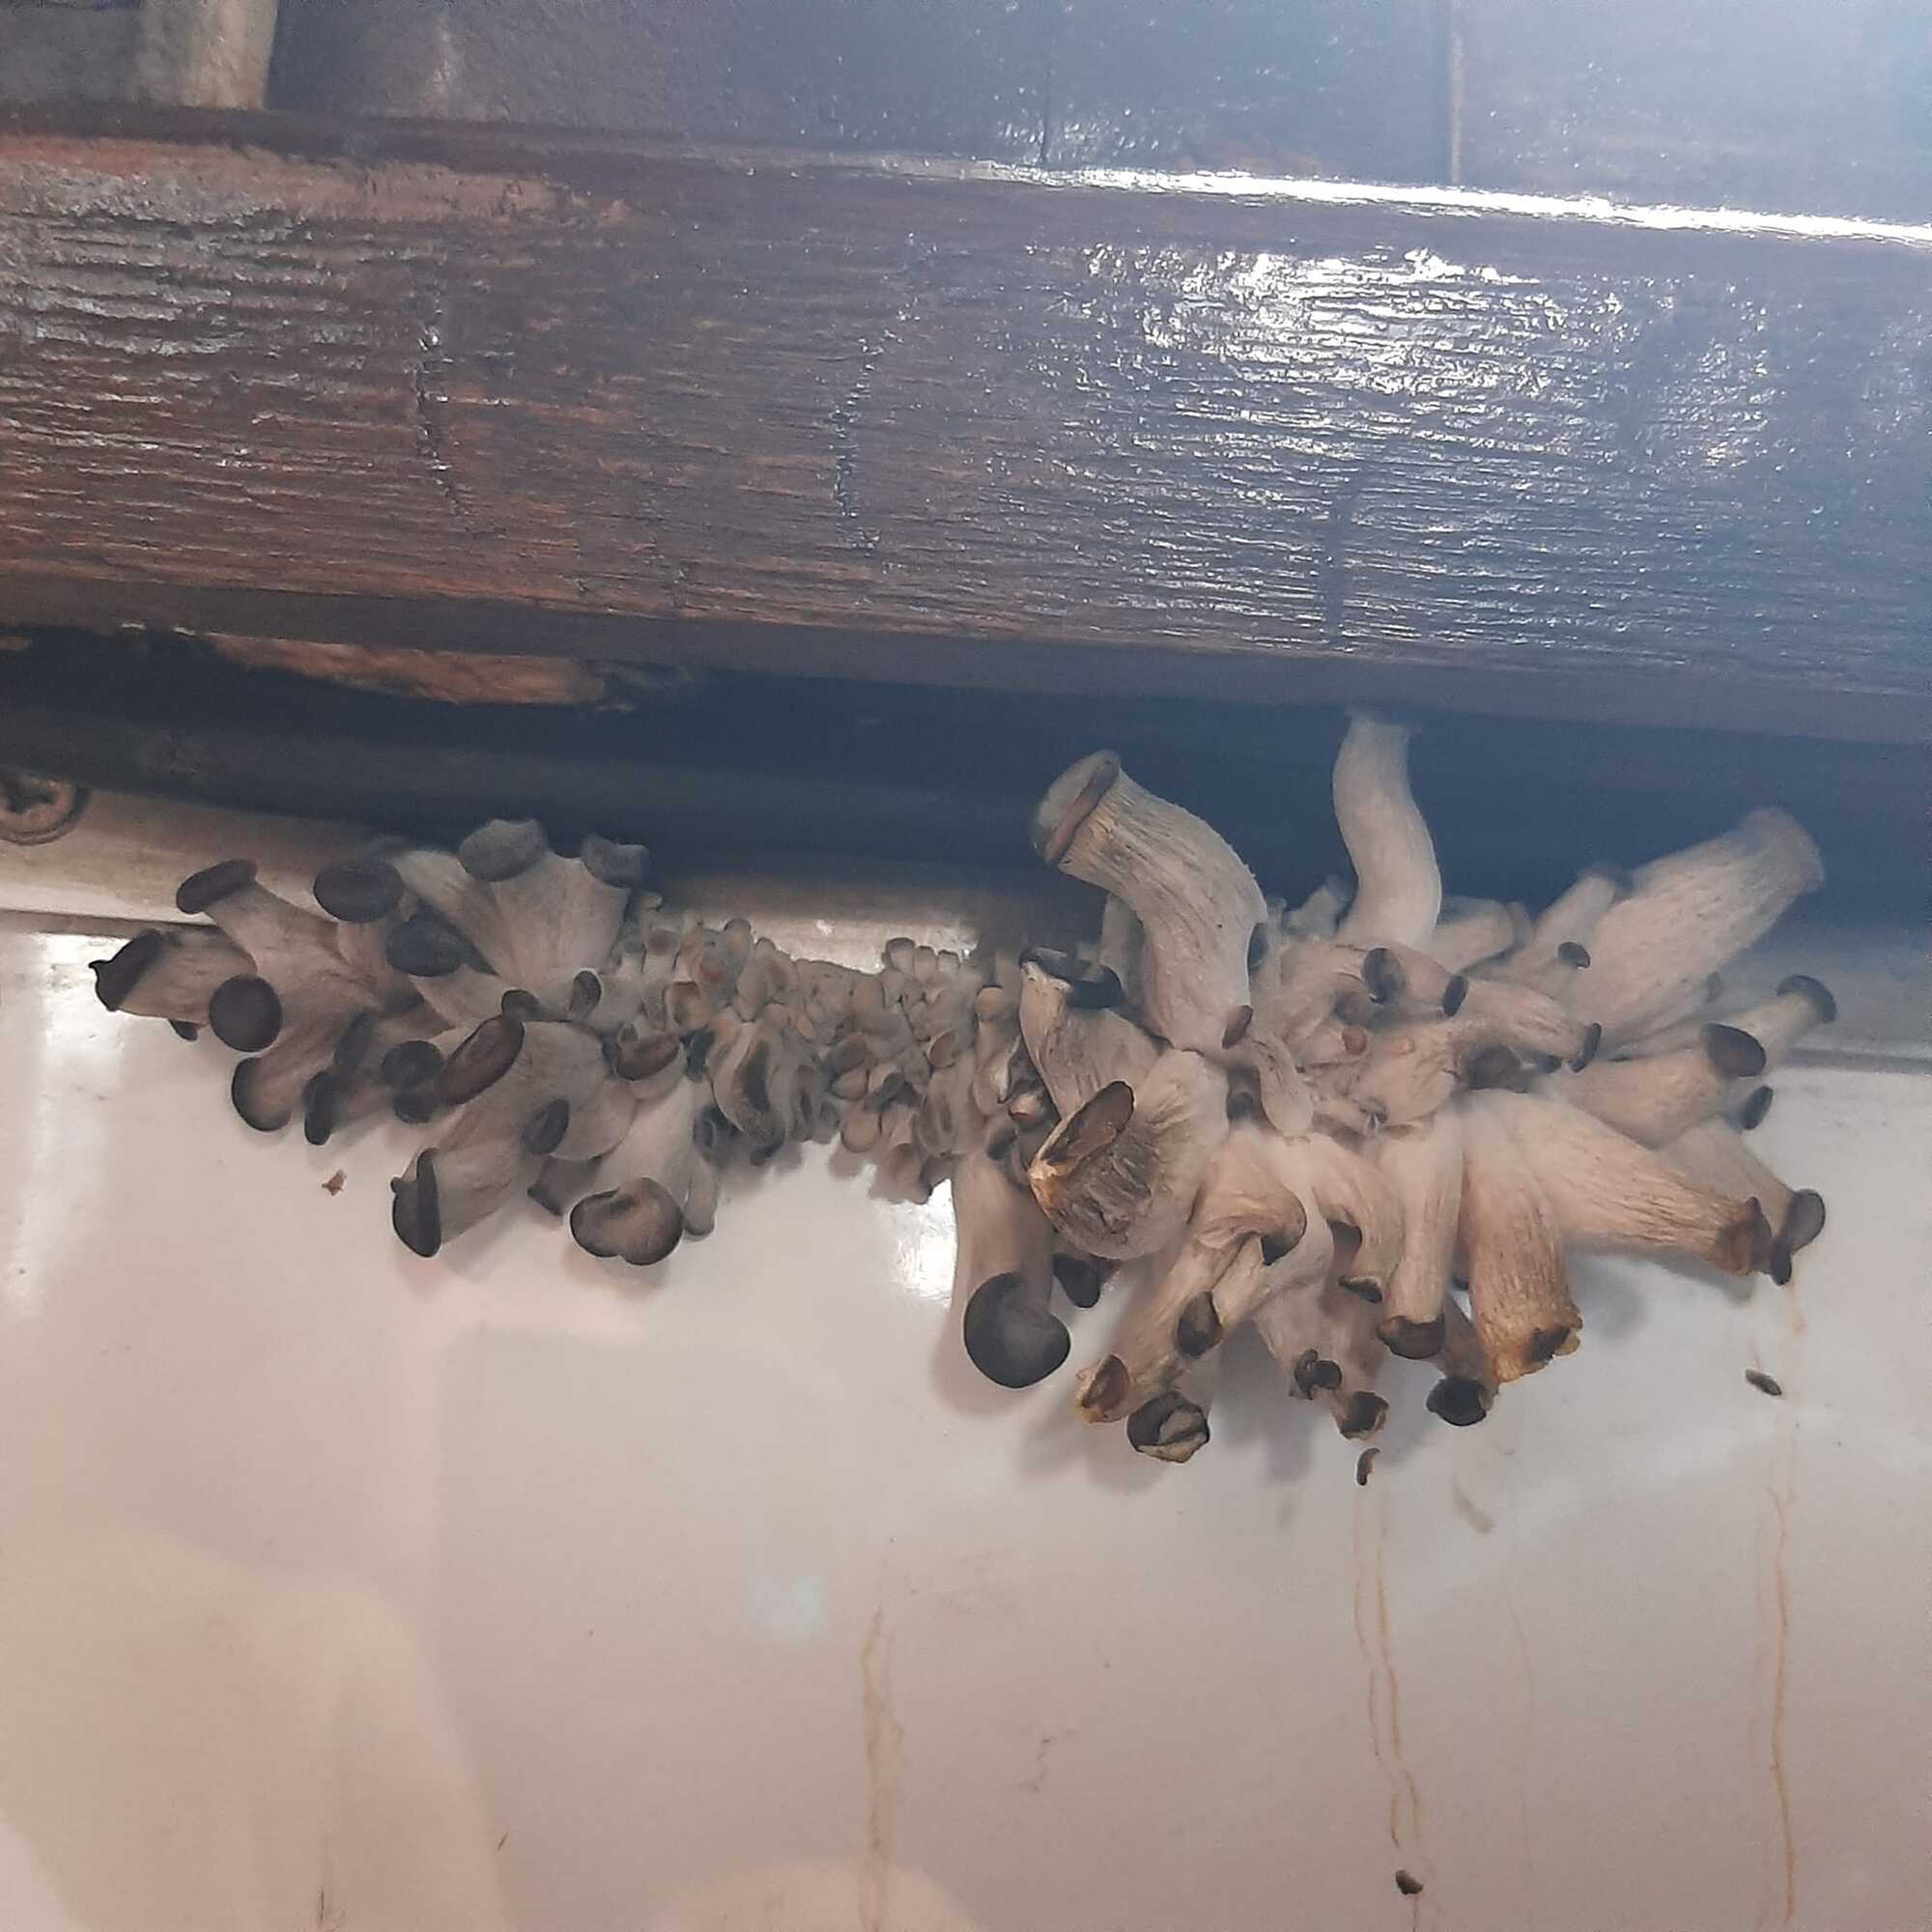 ''A travel bonus?'' Photos of mushrooms that grew right on the UR train stirred up the web. Photo